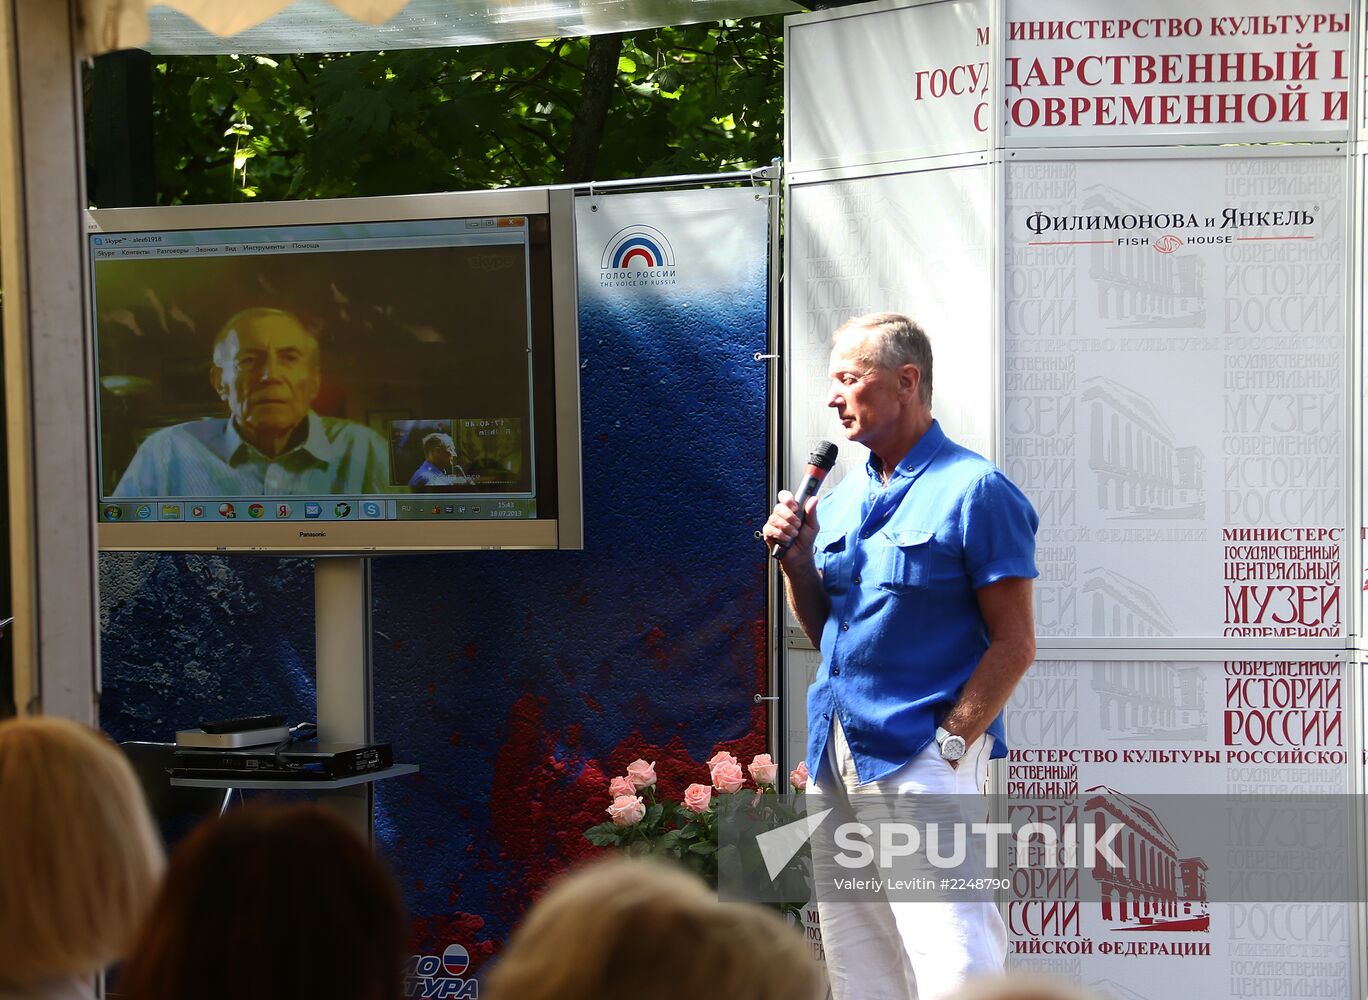 Poet Yevgeny Yevtushenko's 80th birthday celebrated in Moscow